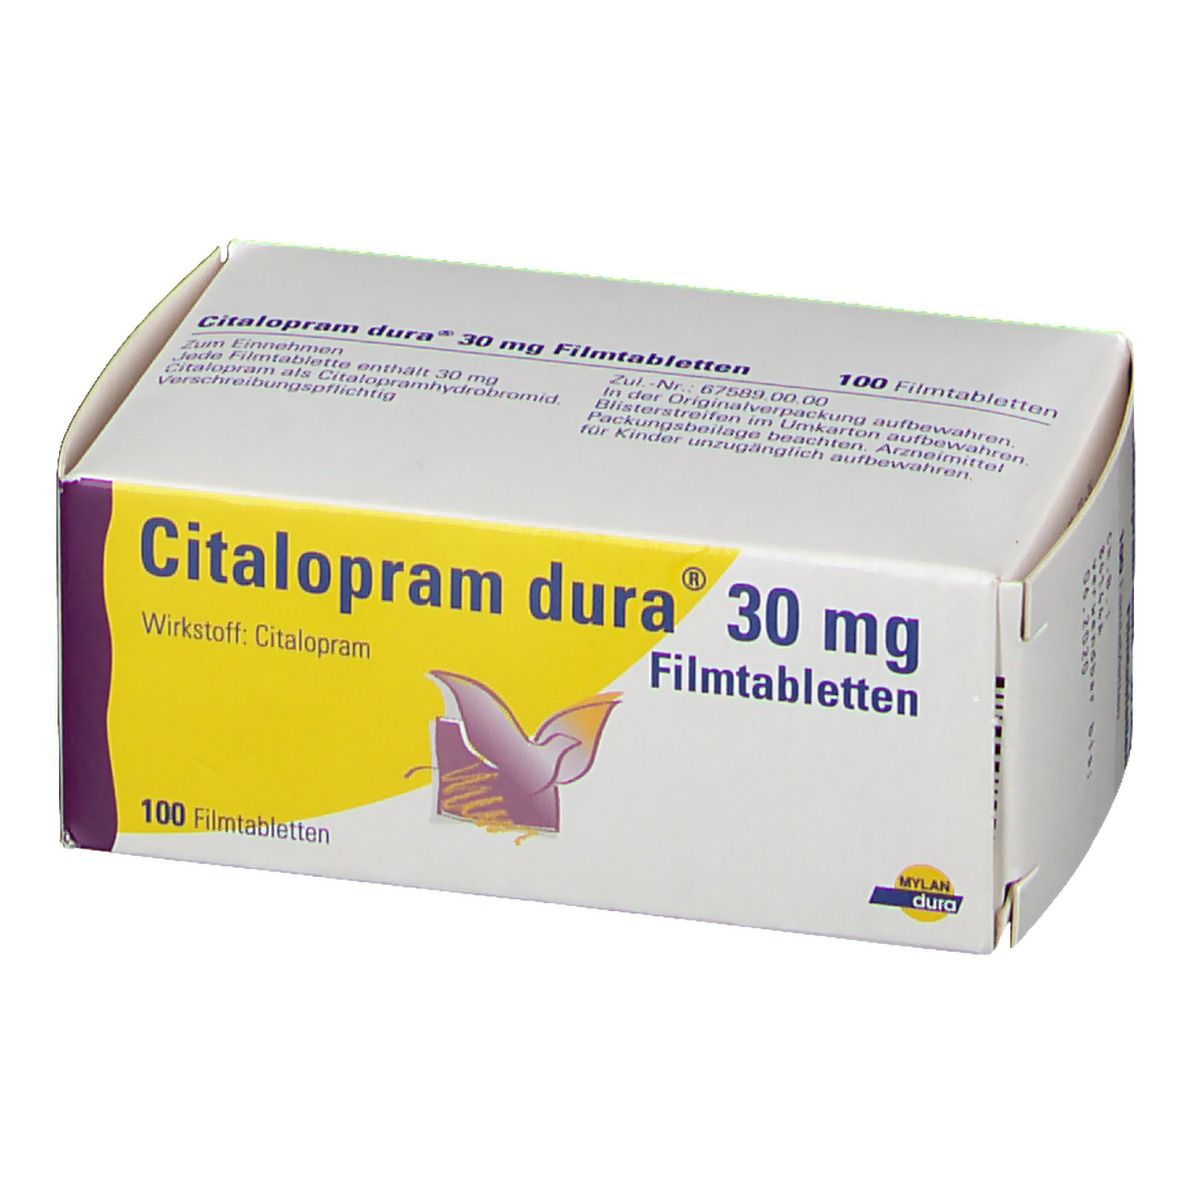 Citalopram dura® 30 mg